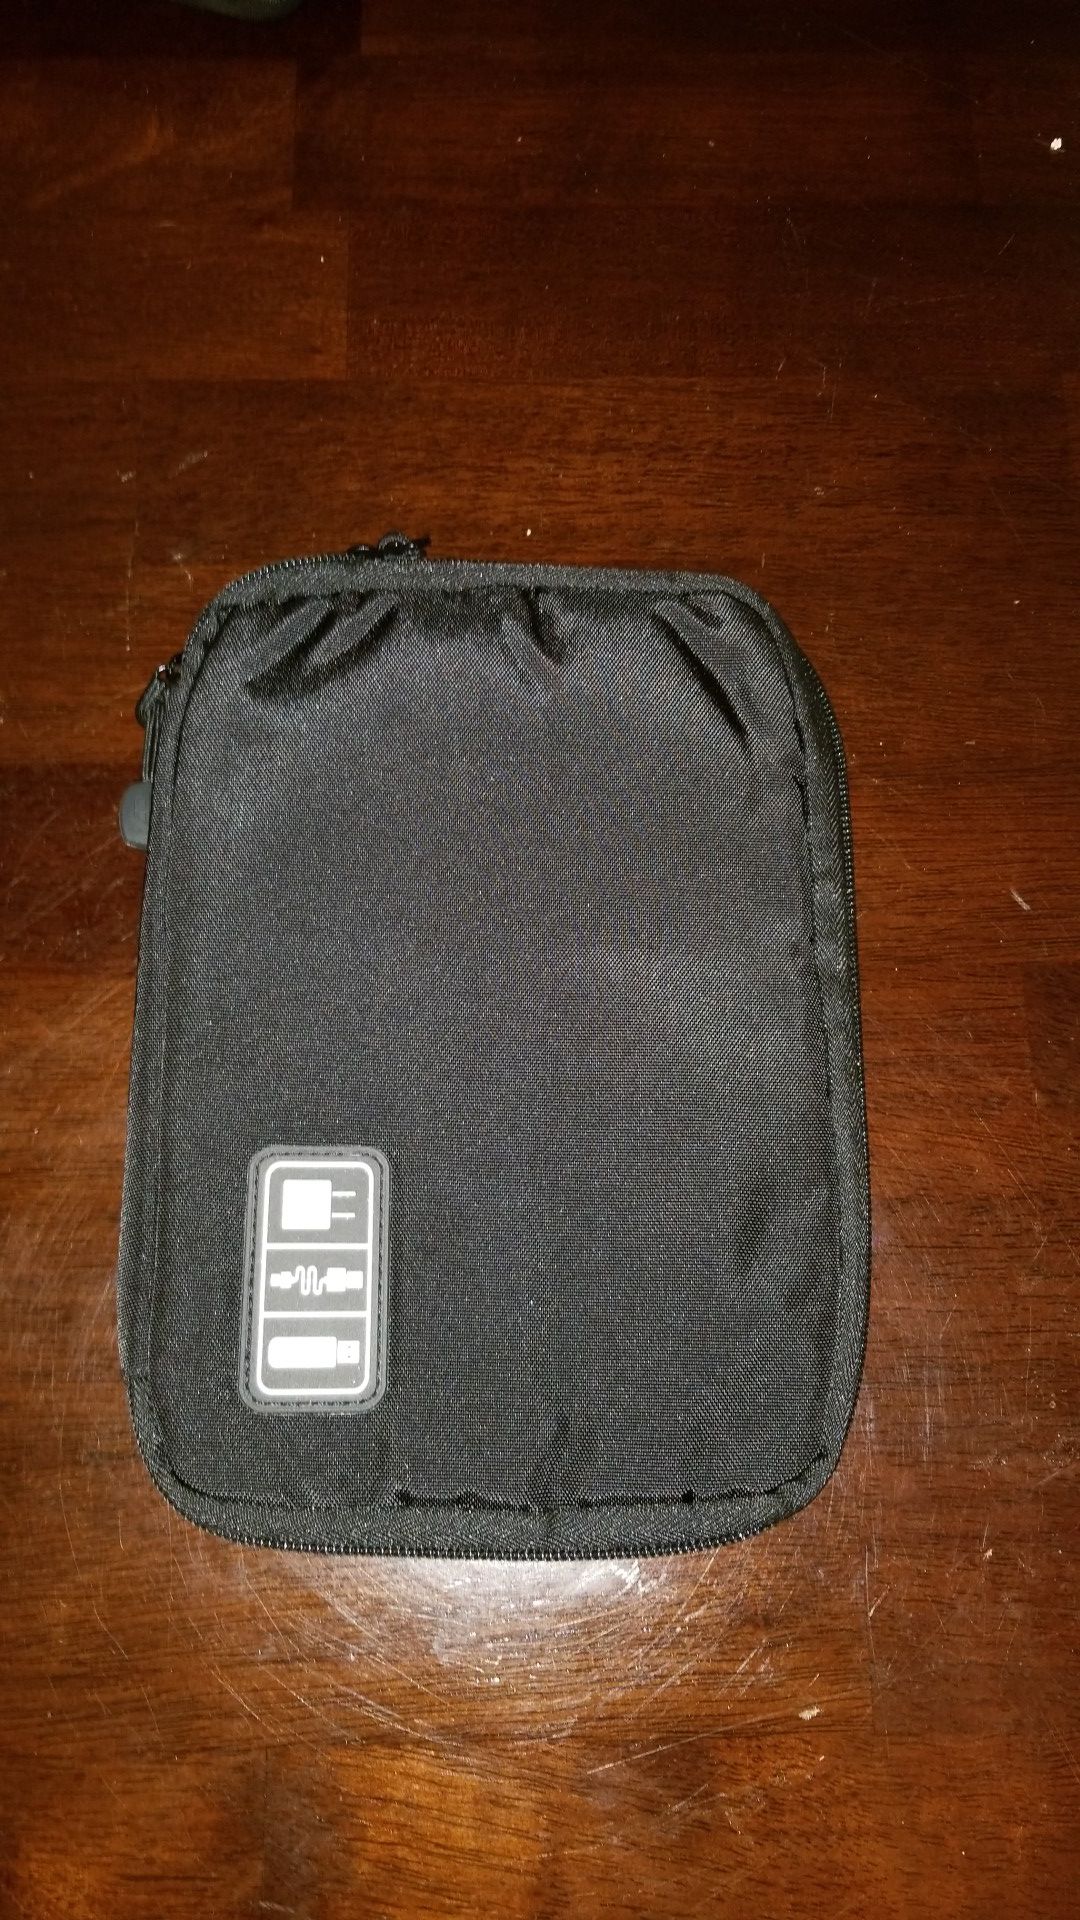 Storage bag zipper for iPhone stuff